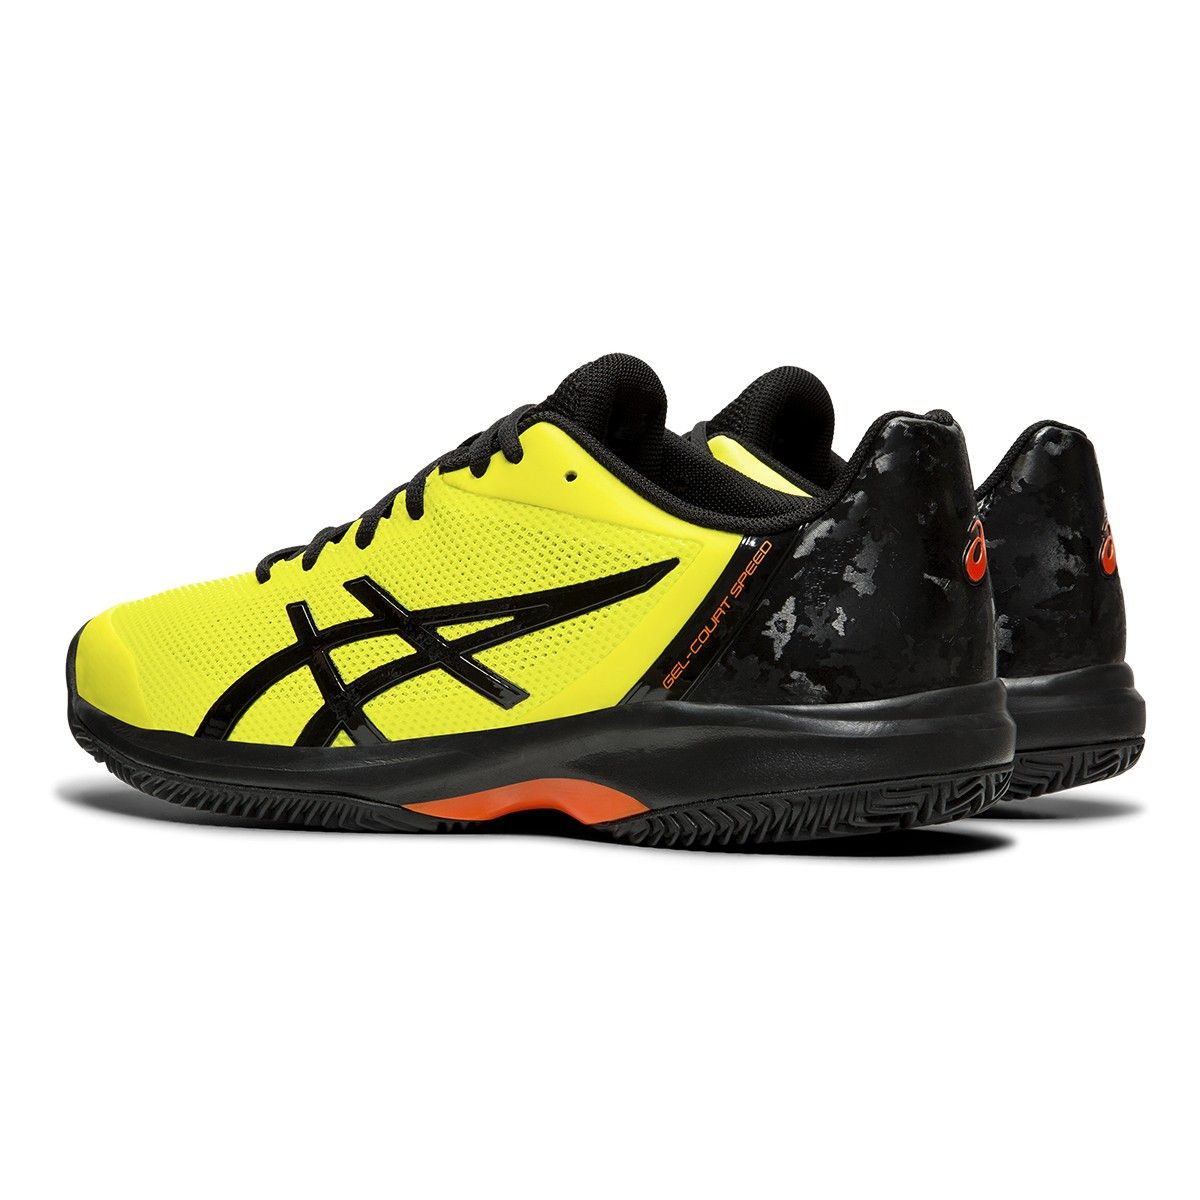 Asics GEL Court Speed Clay Men's Tennis Shoes E801N-750